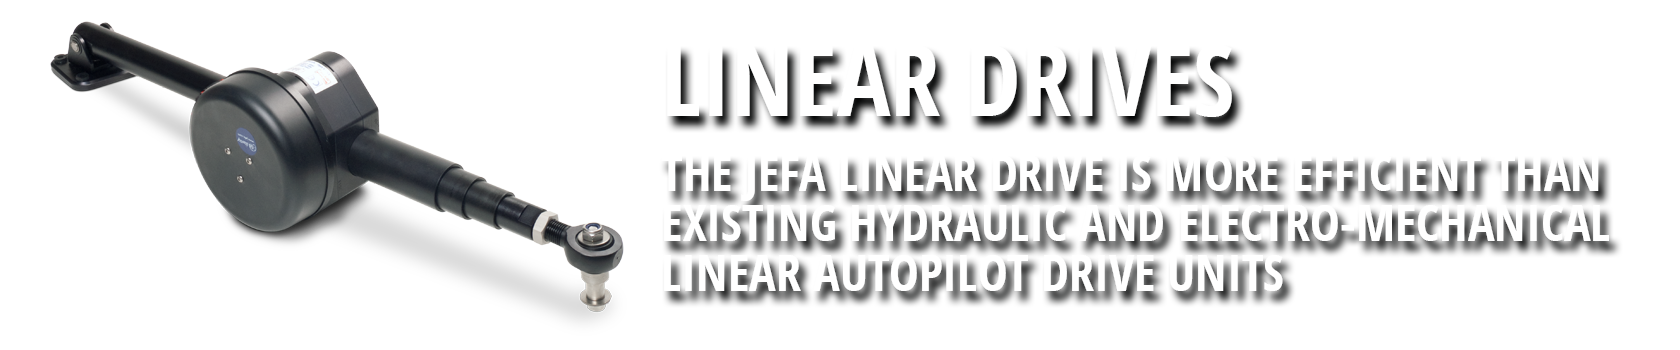 Jefa Linear Drives